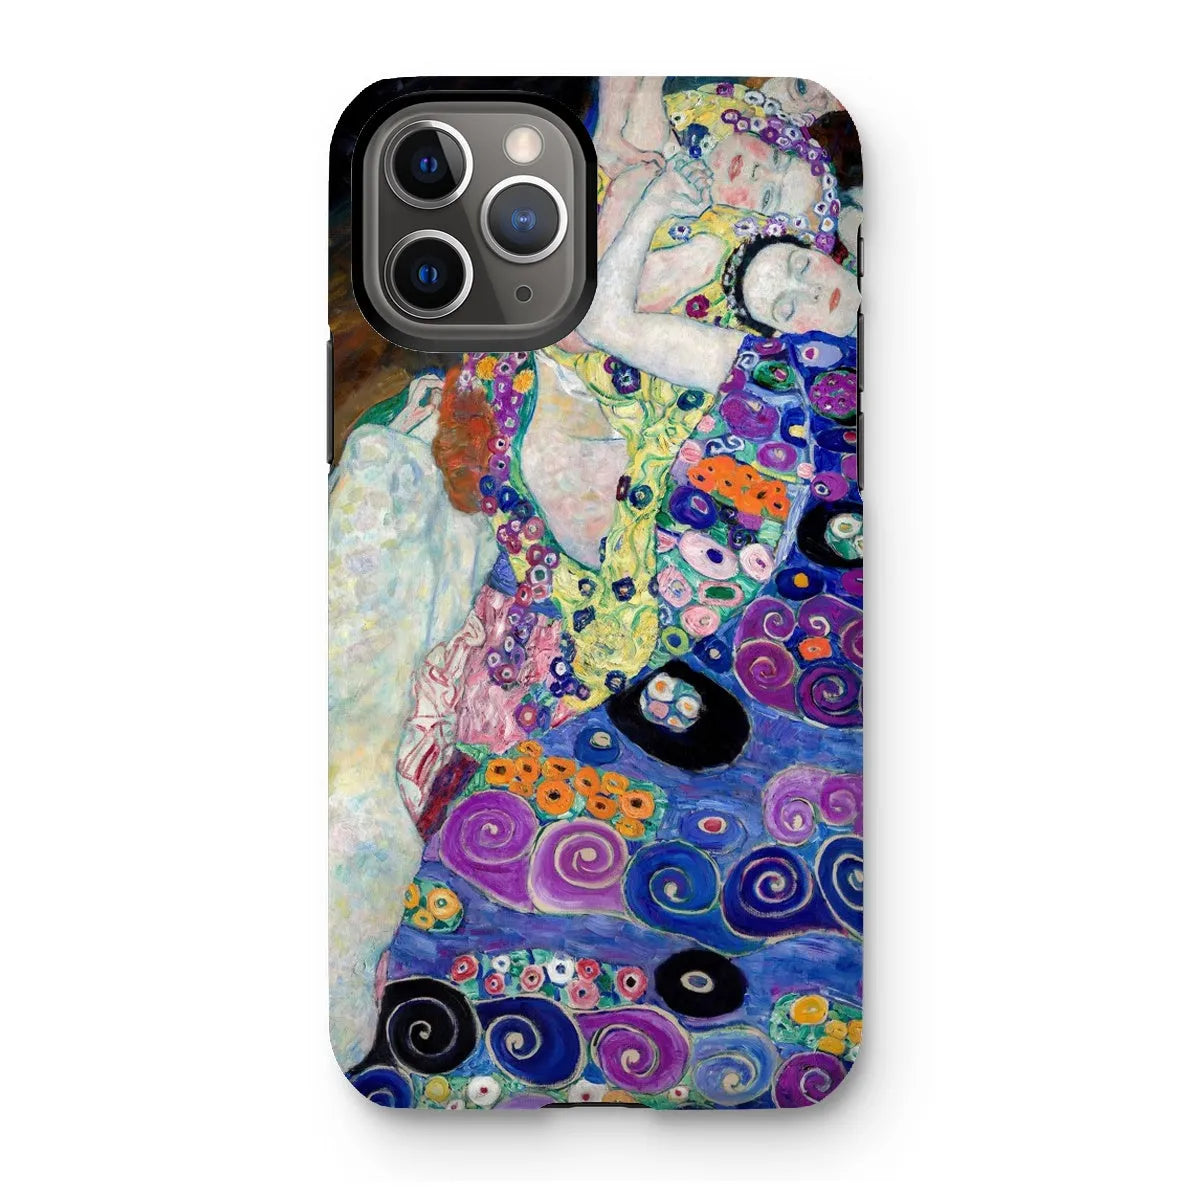 The Virgin - Vienna Secession Phone Case - Gustav Klimt - Iphone 11 Pro / Matte - Mobile Phone Cases - Aesthetic Art